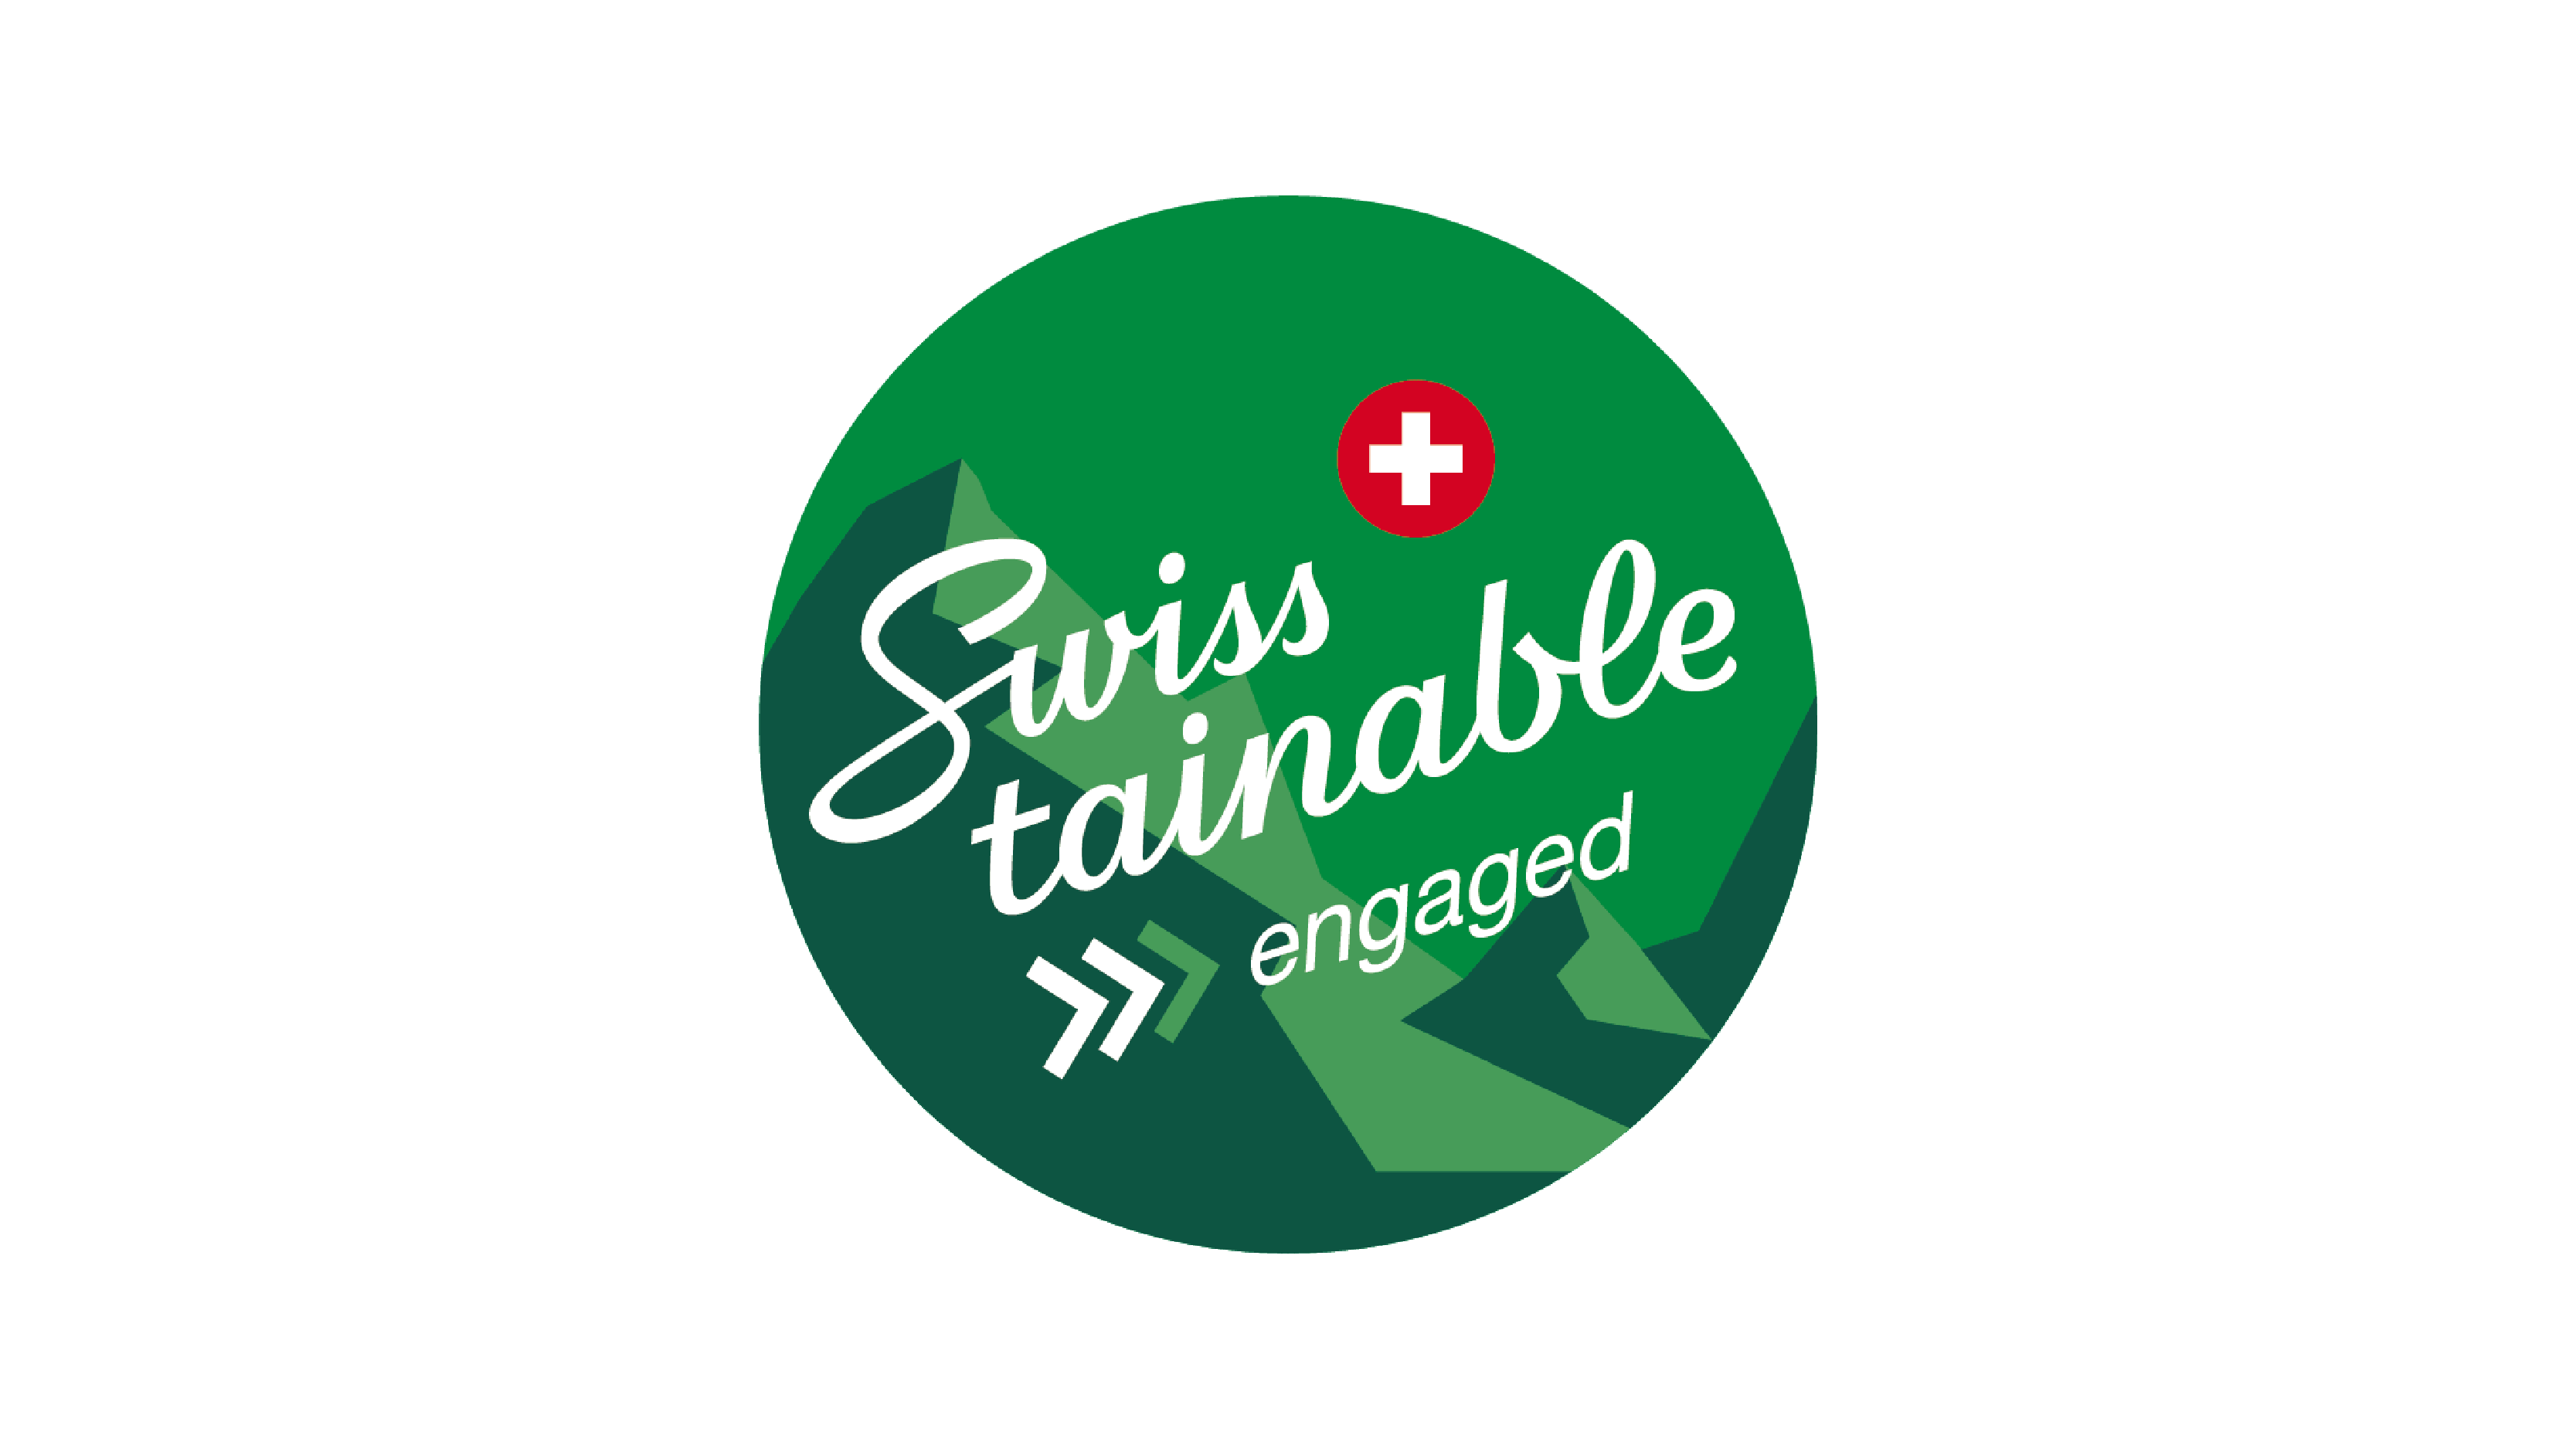 Swisstainable II - engaged